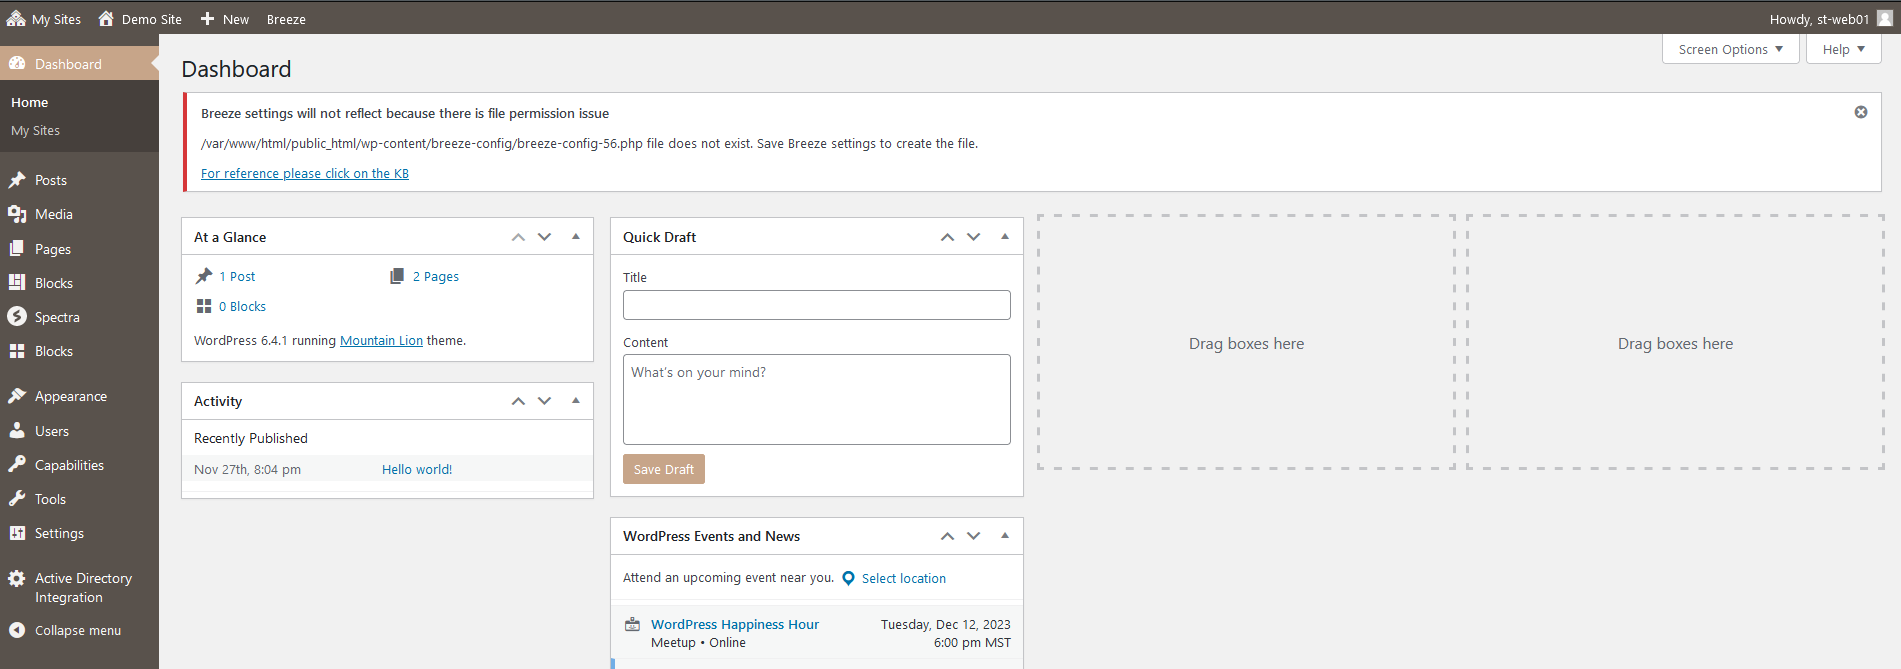 Screenshot of Wordpress dashboard